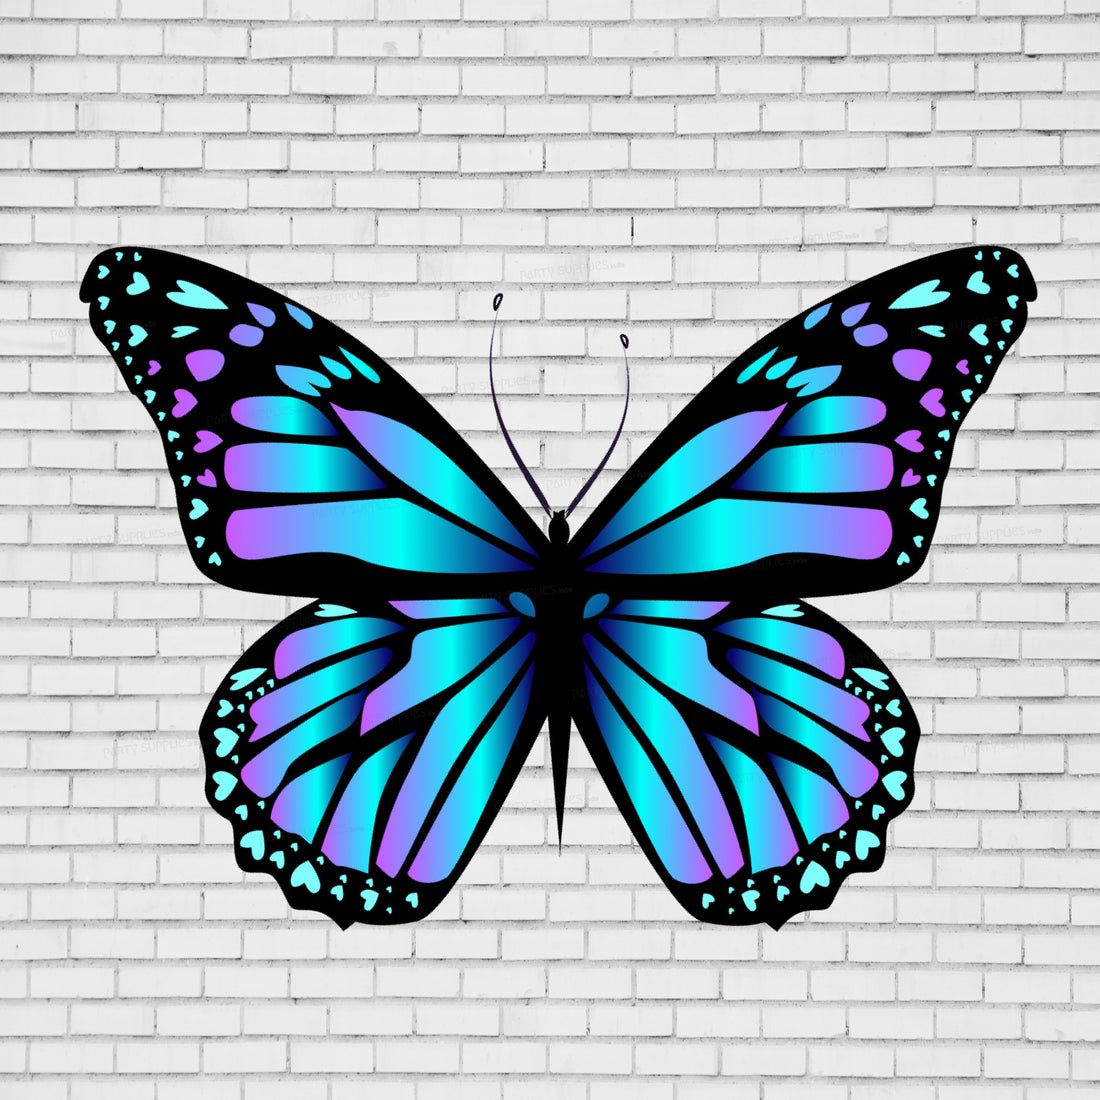 PSI Butterfly Theme Cutout - 02